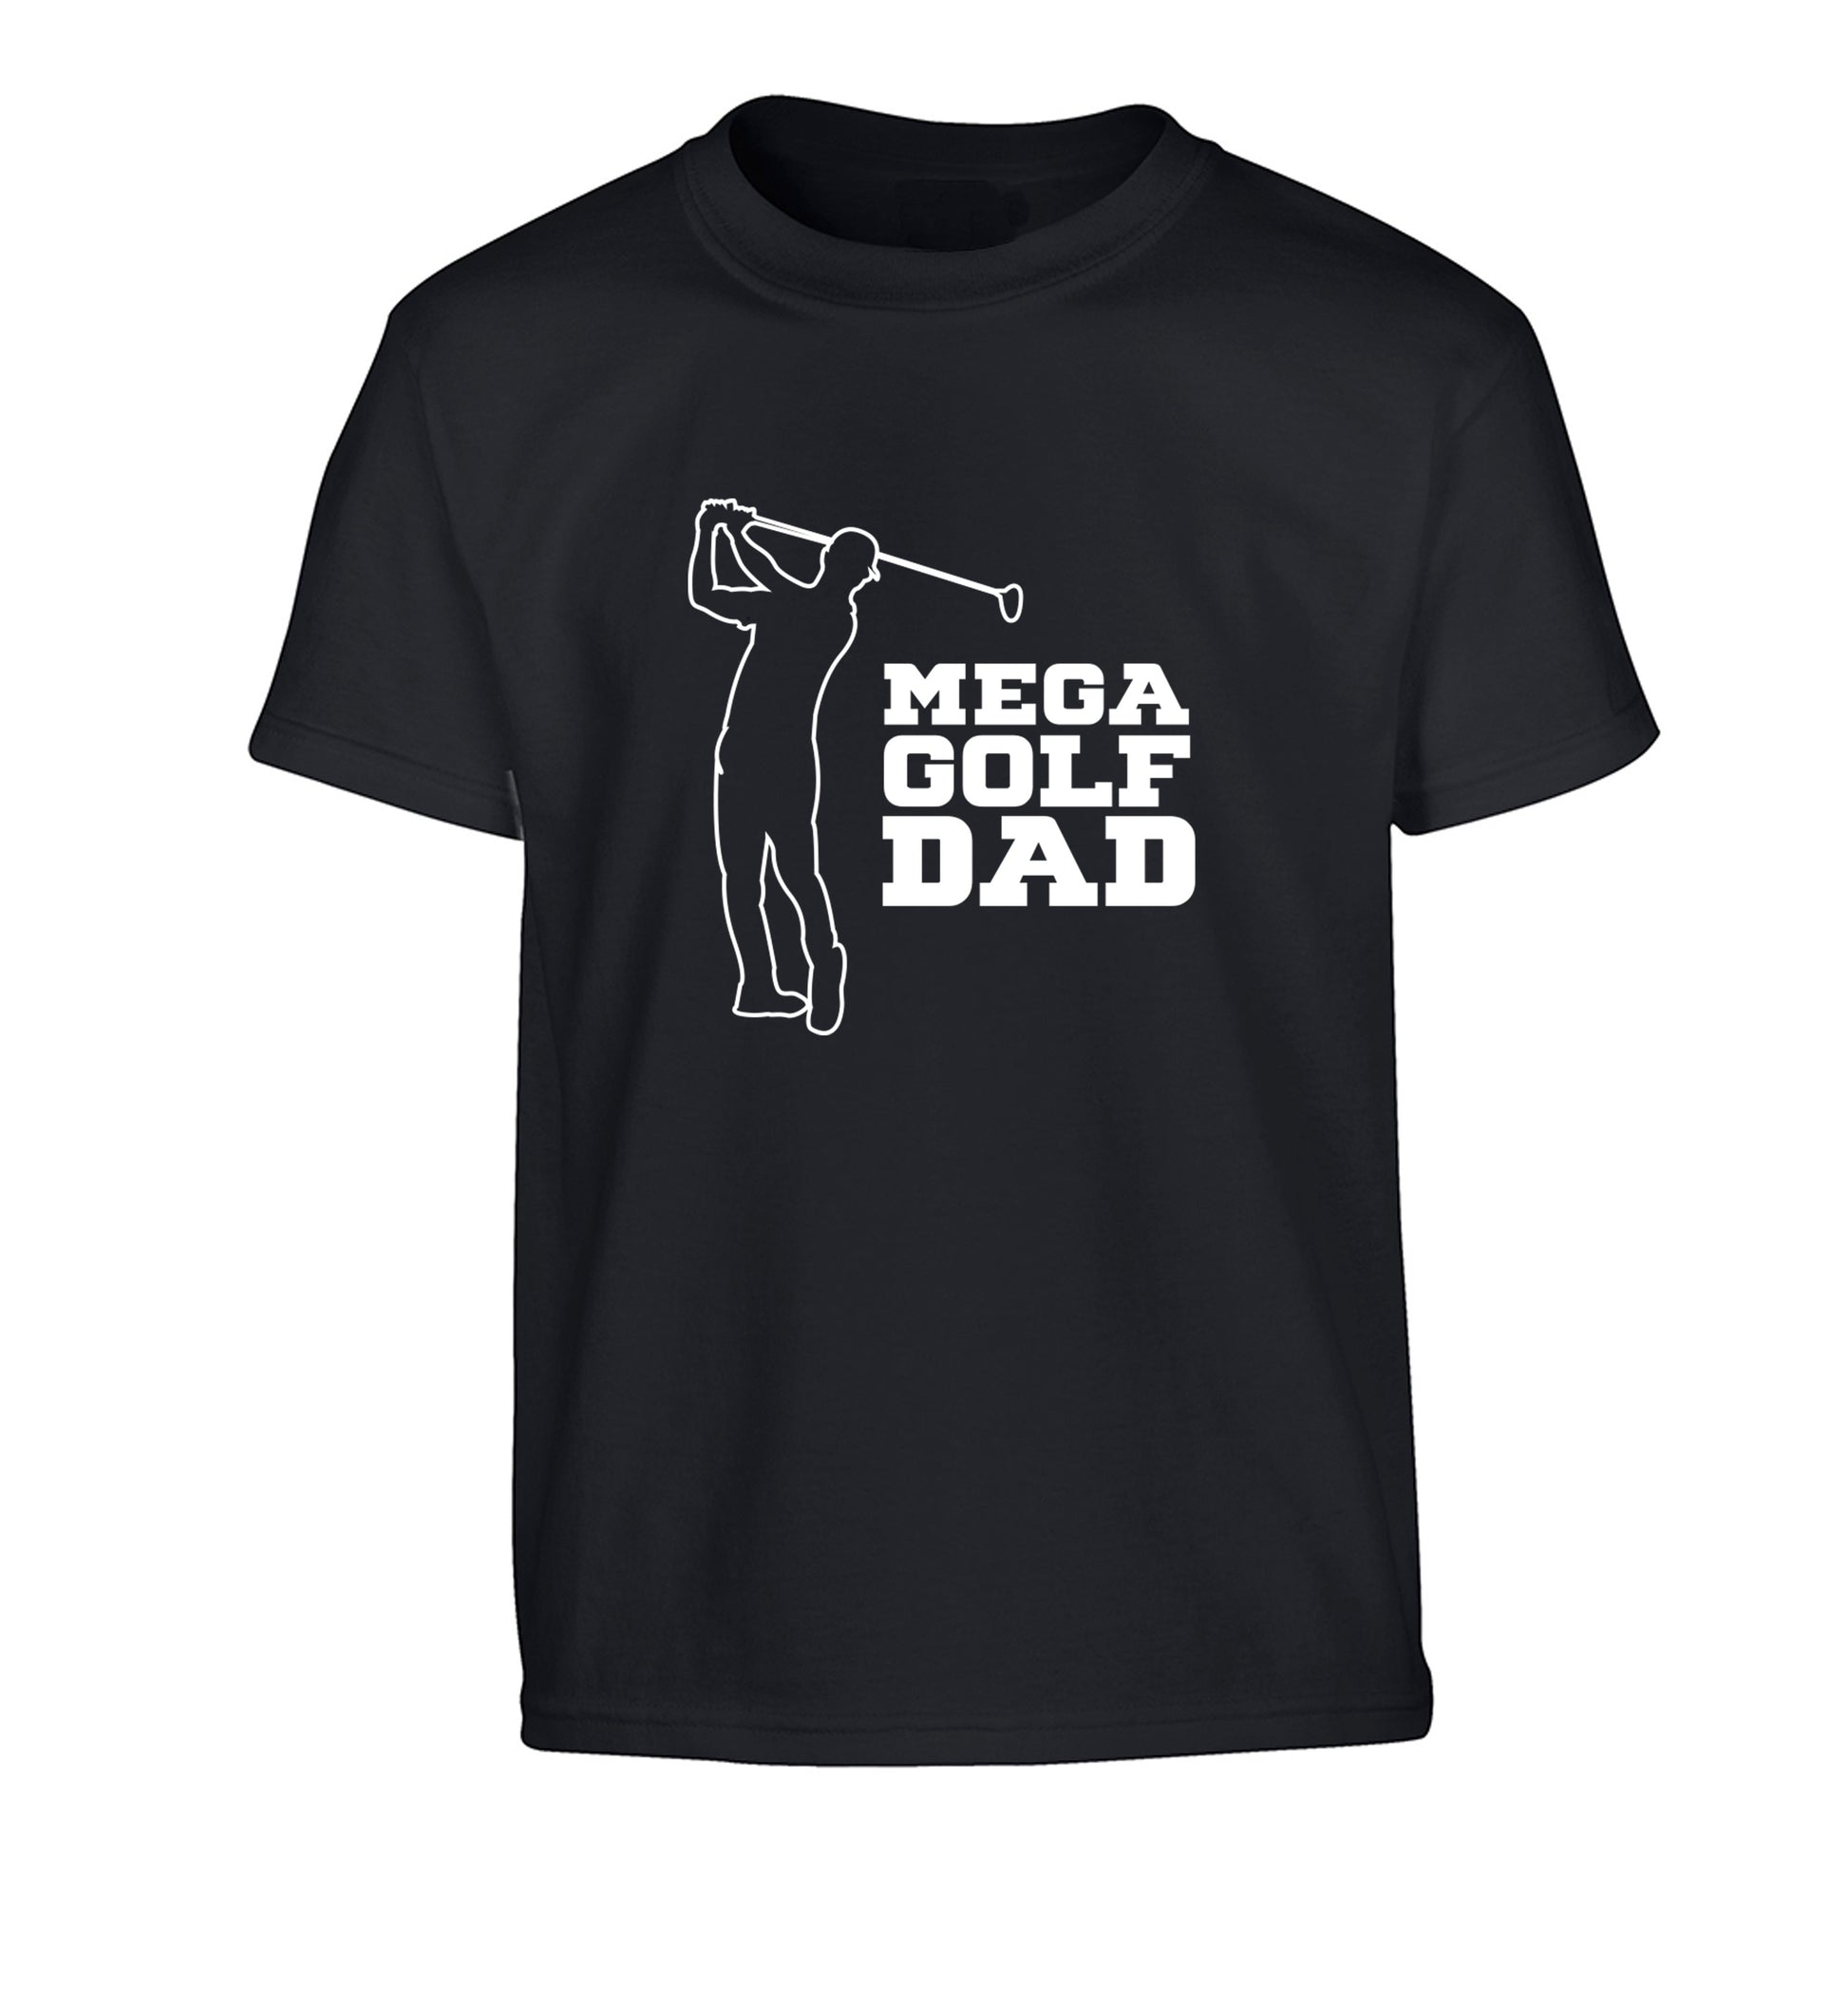 Mega golfing dad Children's black Tshirt 12-13 Years